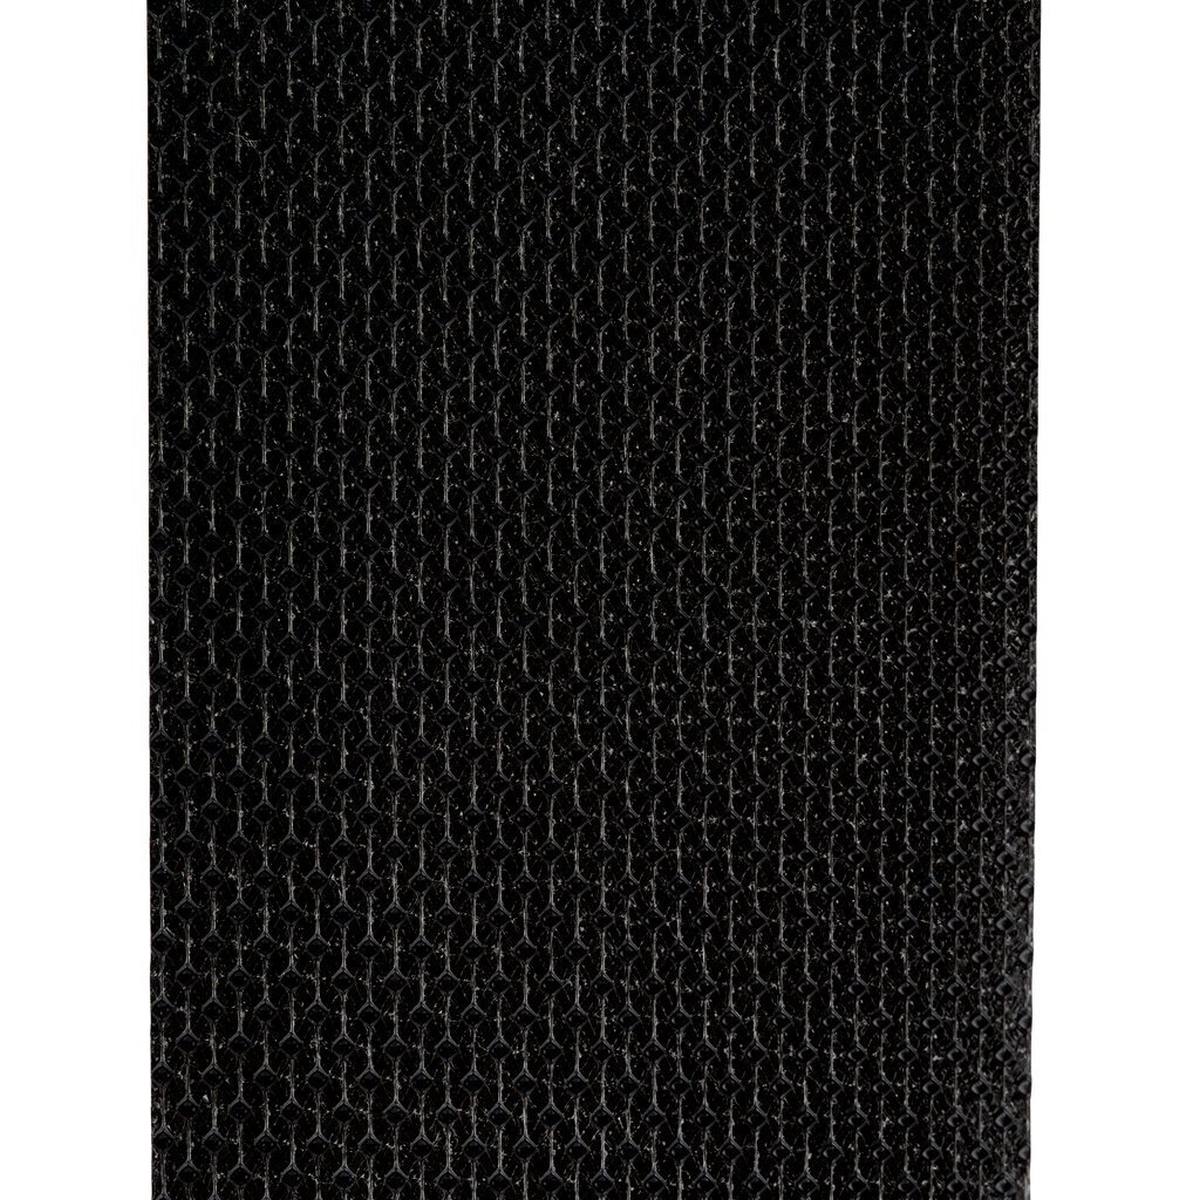 3M Scotch 23 Self-sealing ethylene propylene rubber tape, black, 38 mm x 9.15 m, 0.76 mm